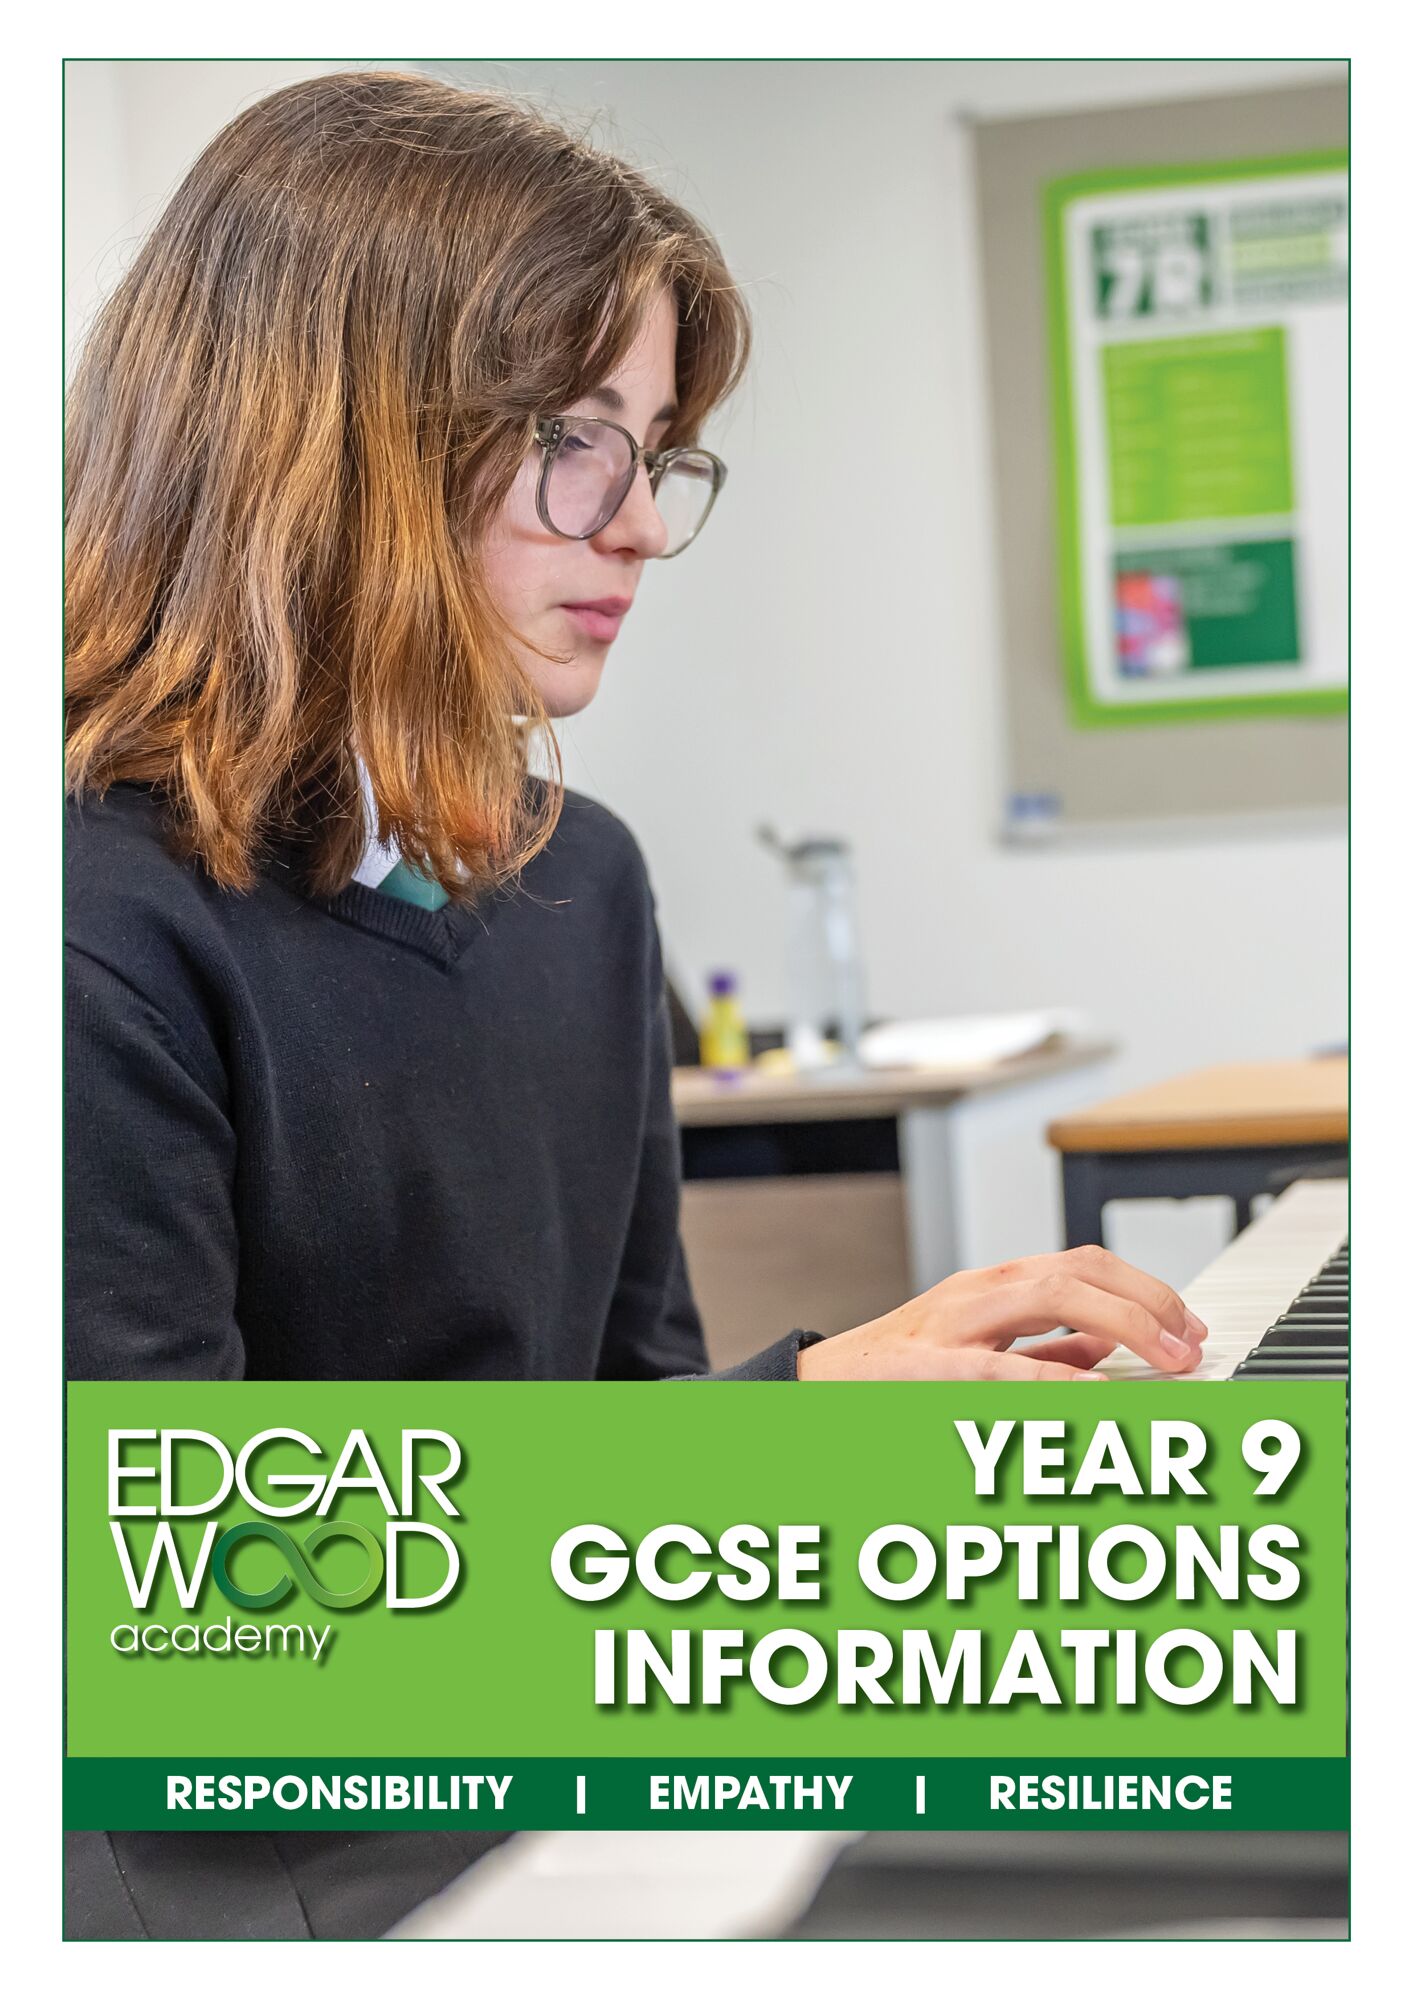 Ewa gcse options booklet cover